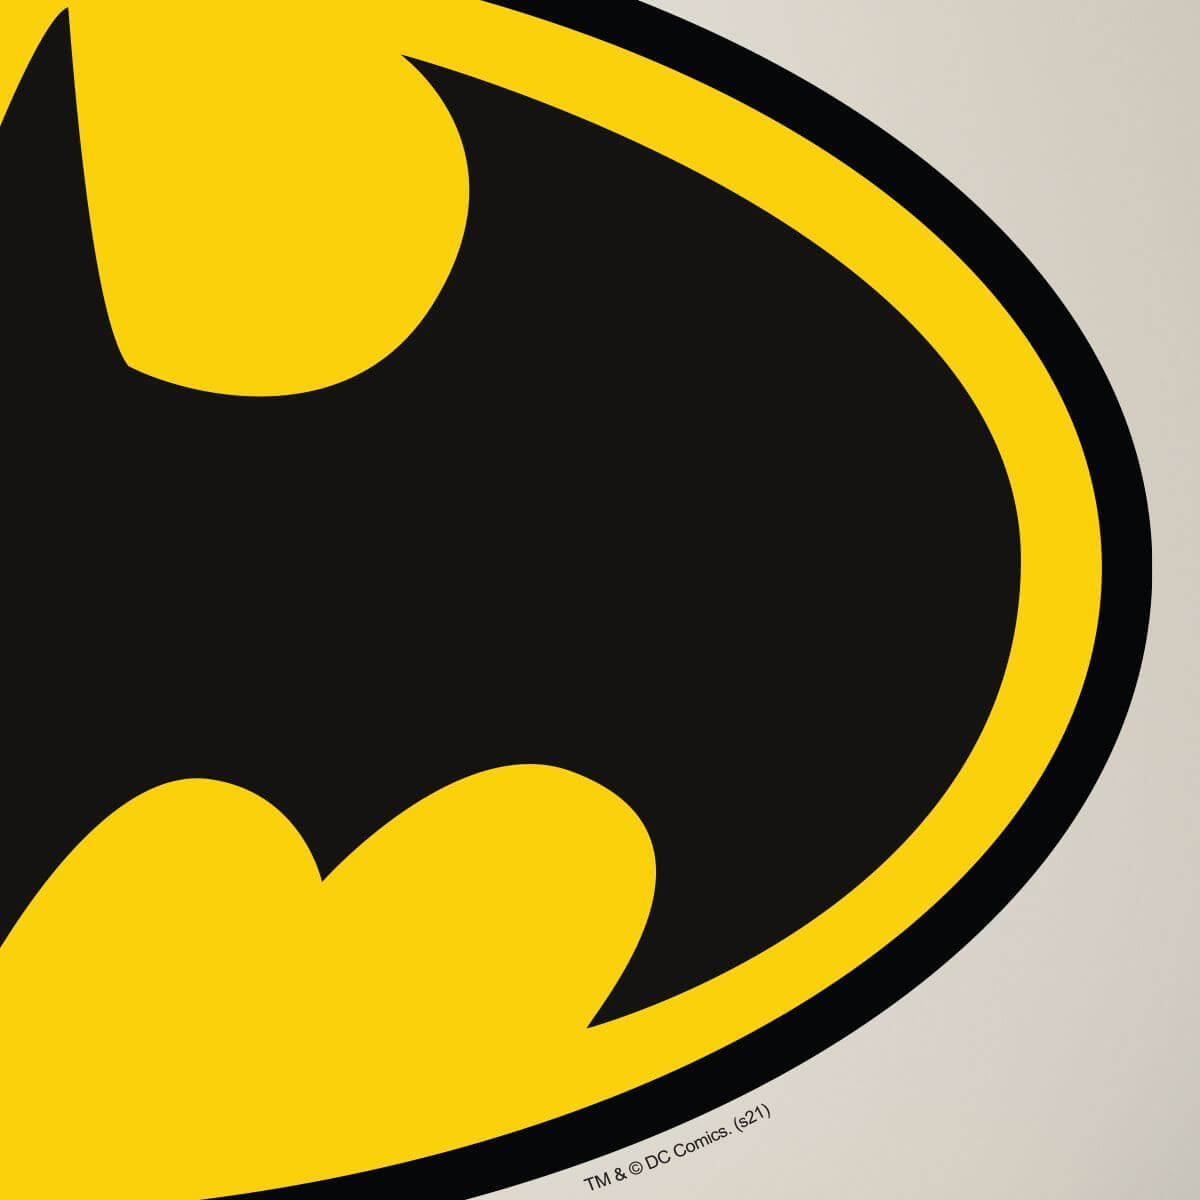 Kismet Decals Batman Logo Licensed Wall Sticker - Easy DIY Justice League Home & Room Decor Wall Art - Kismet Decals